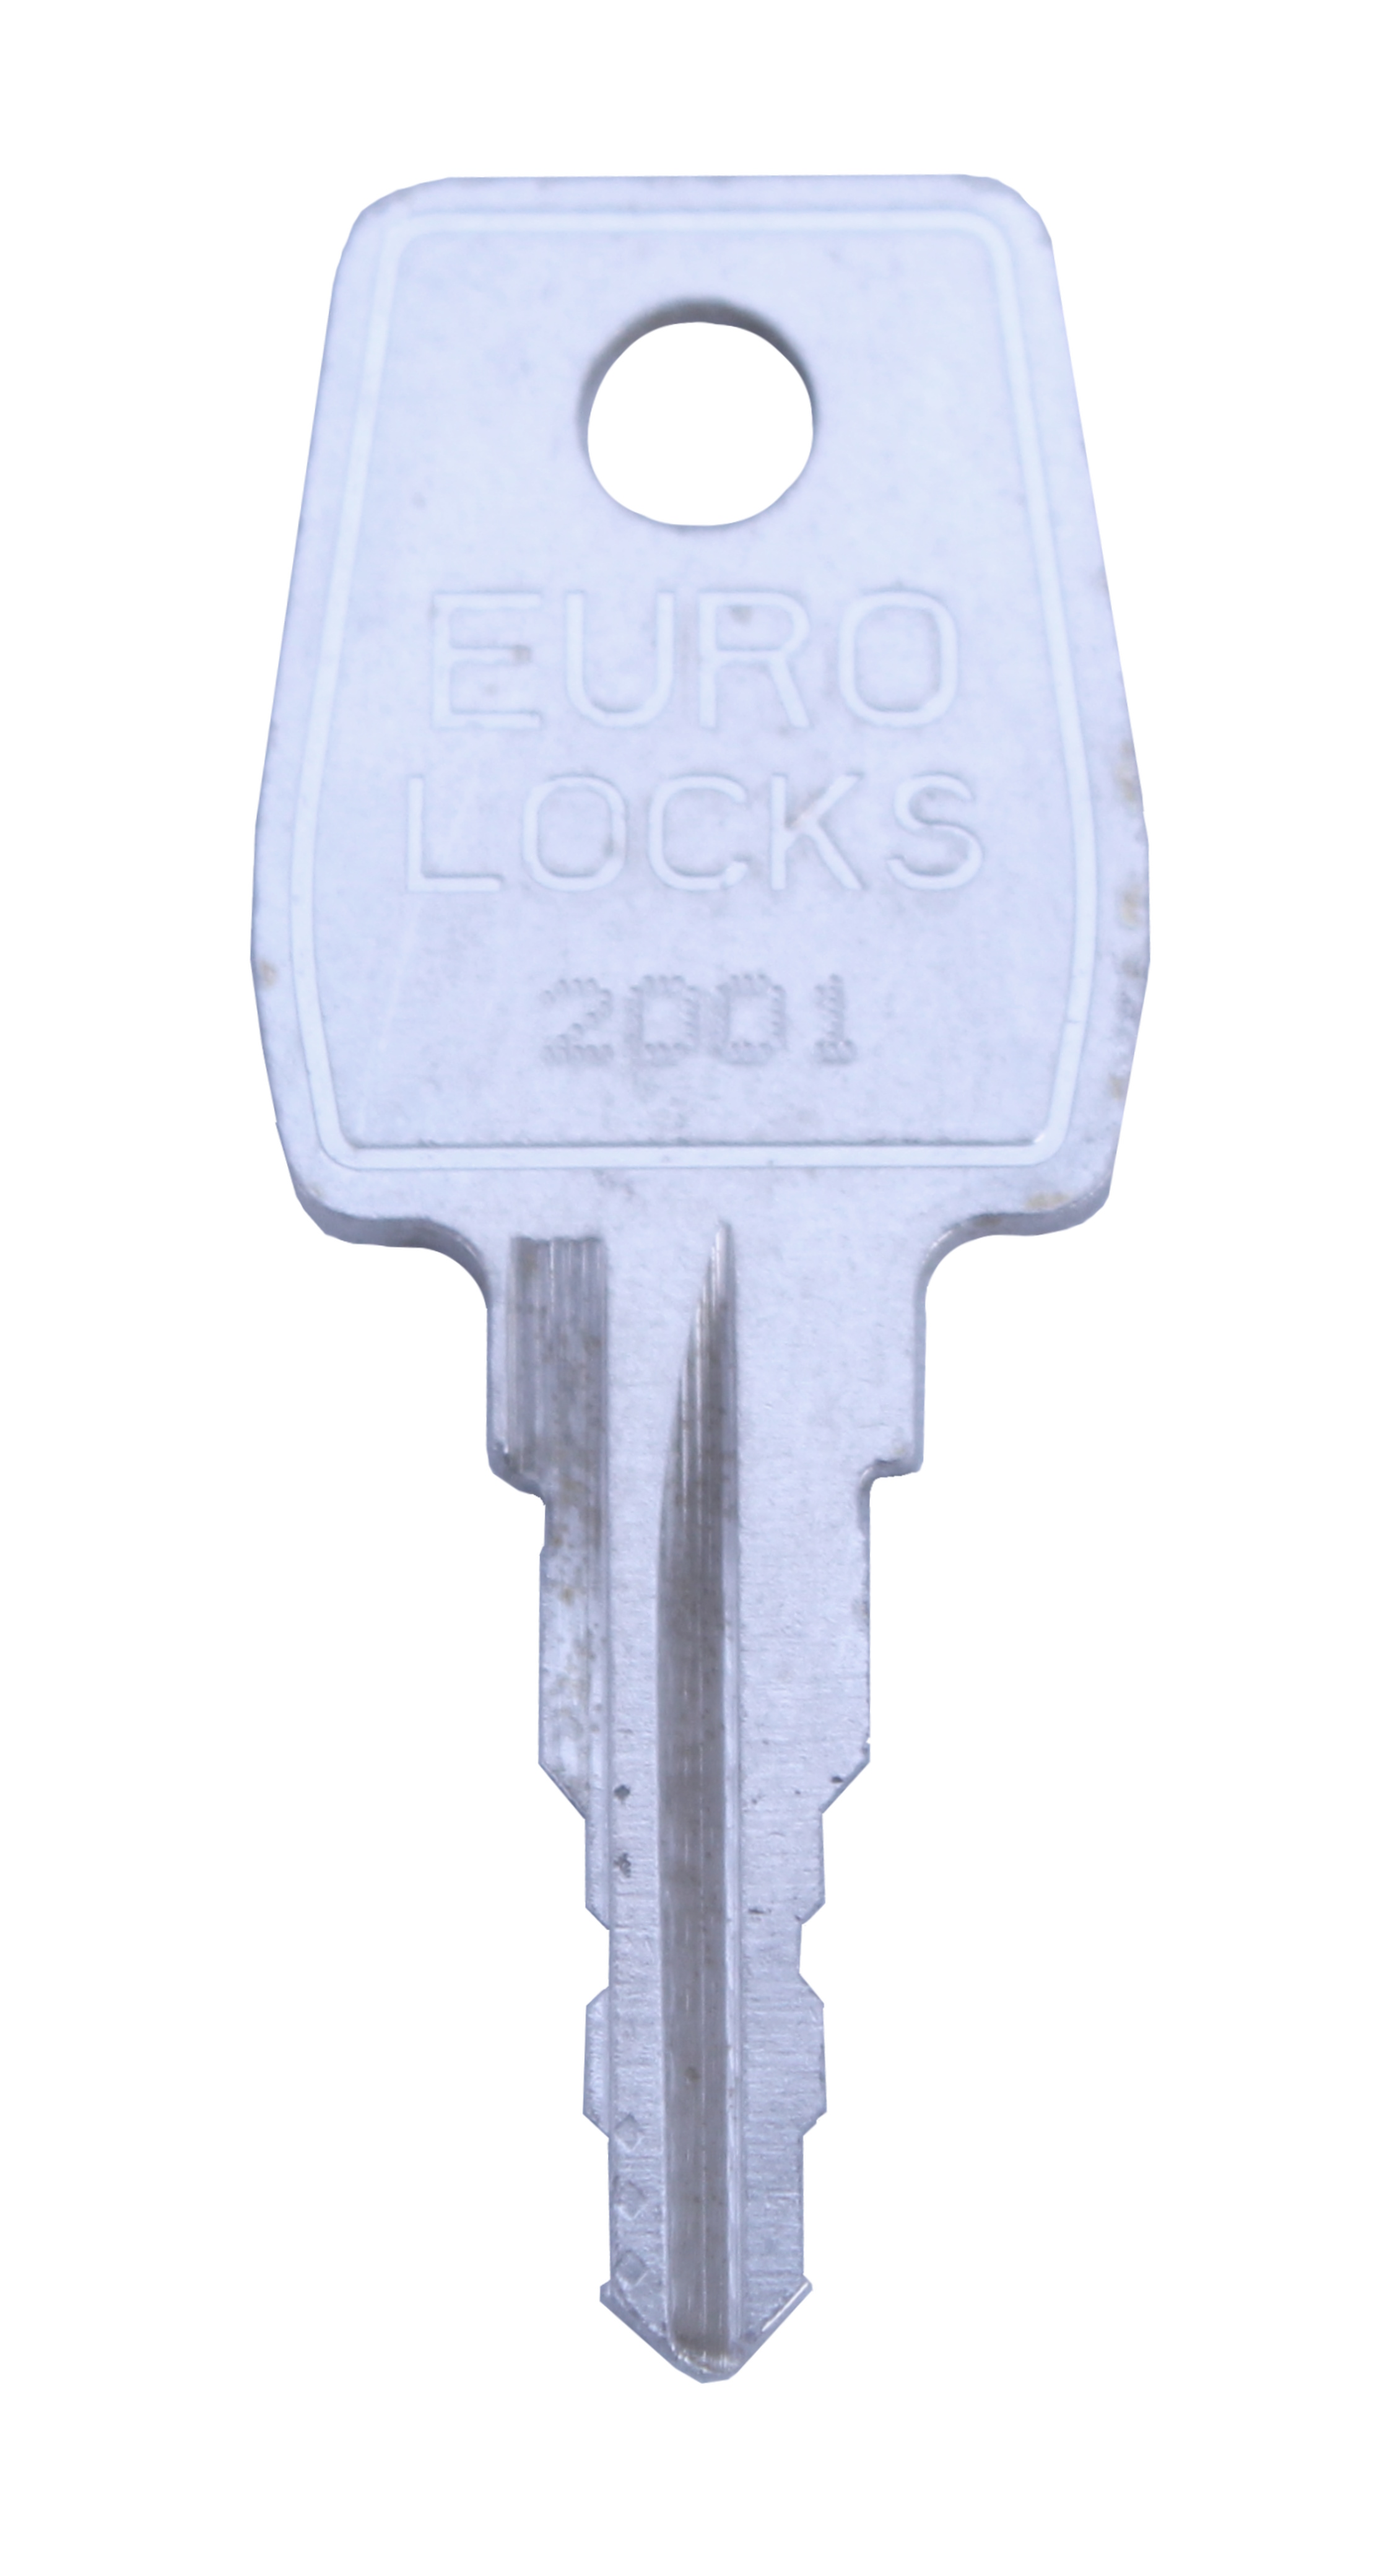 EUROLOCKS Schüssel 2001